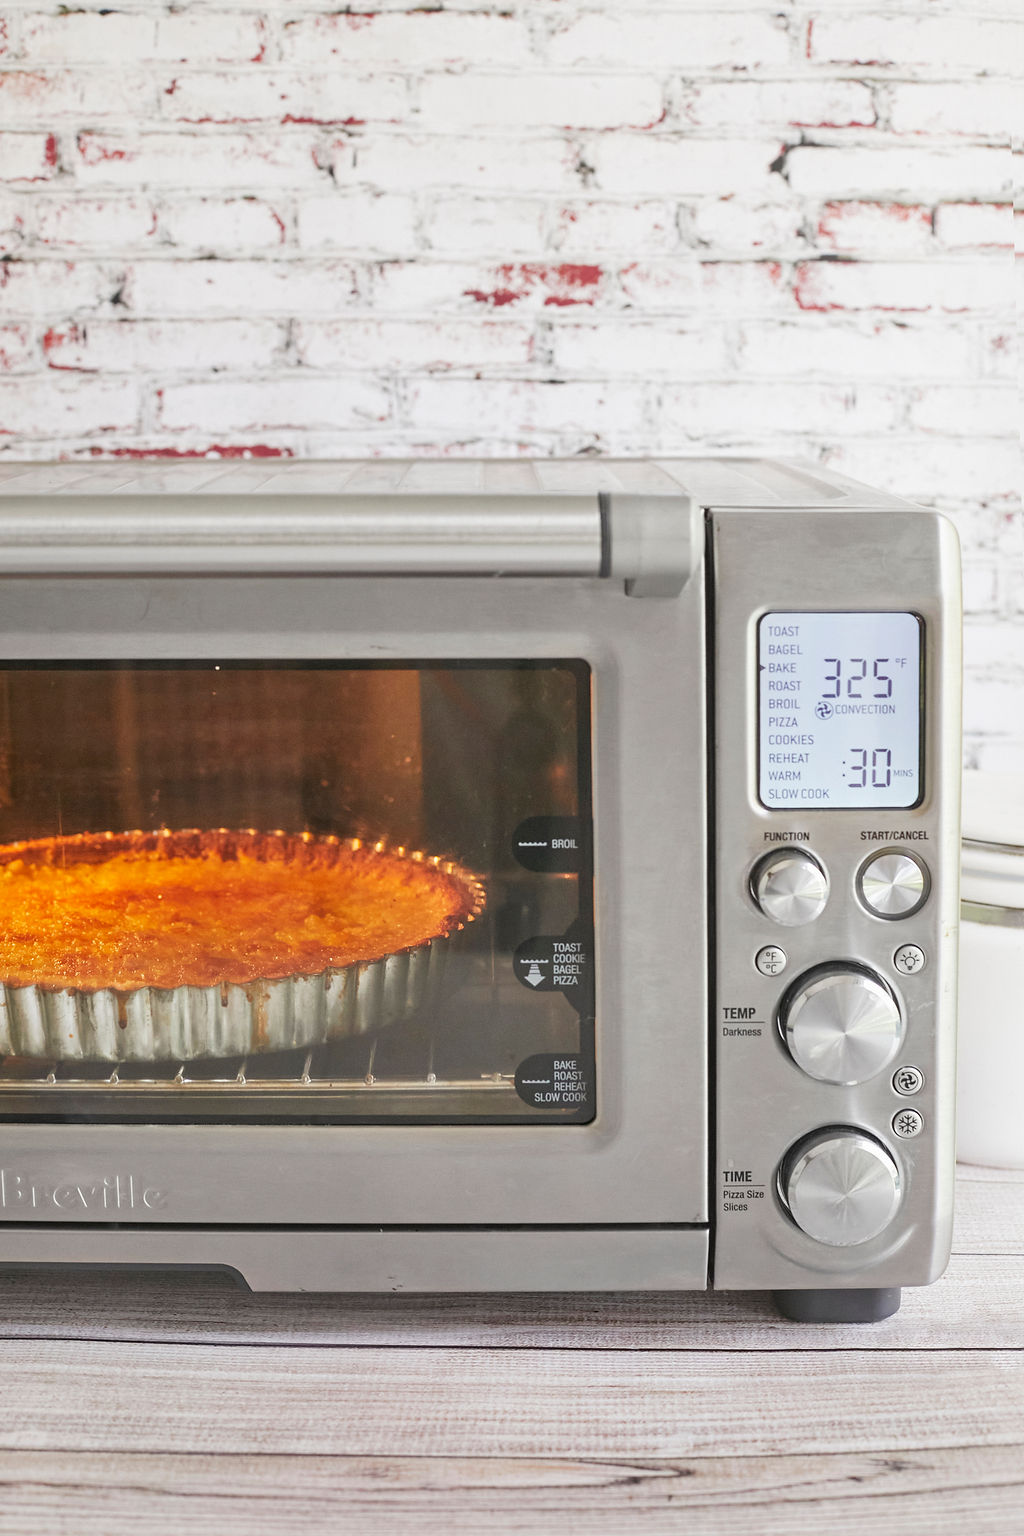 An OTG, or toaster oven, baking a tart.